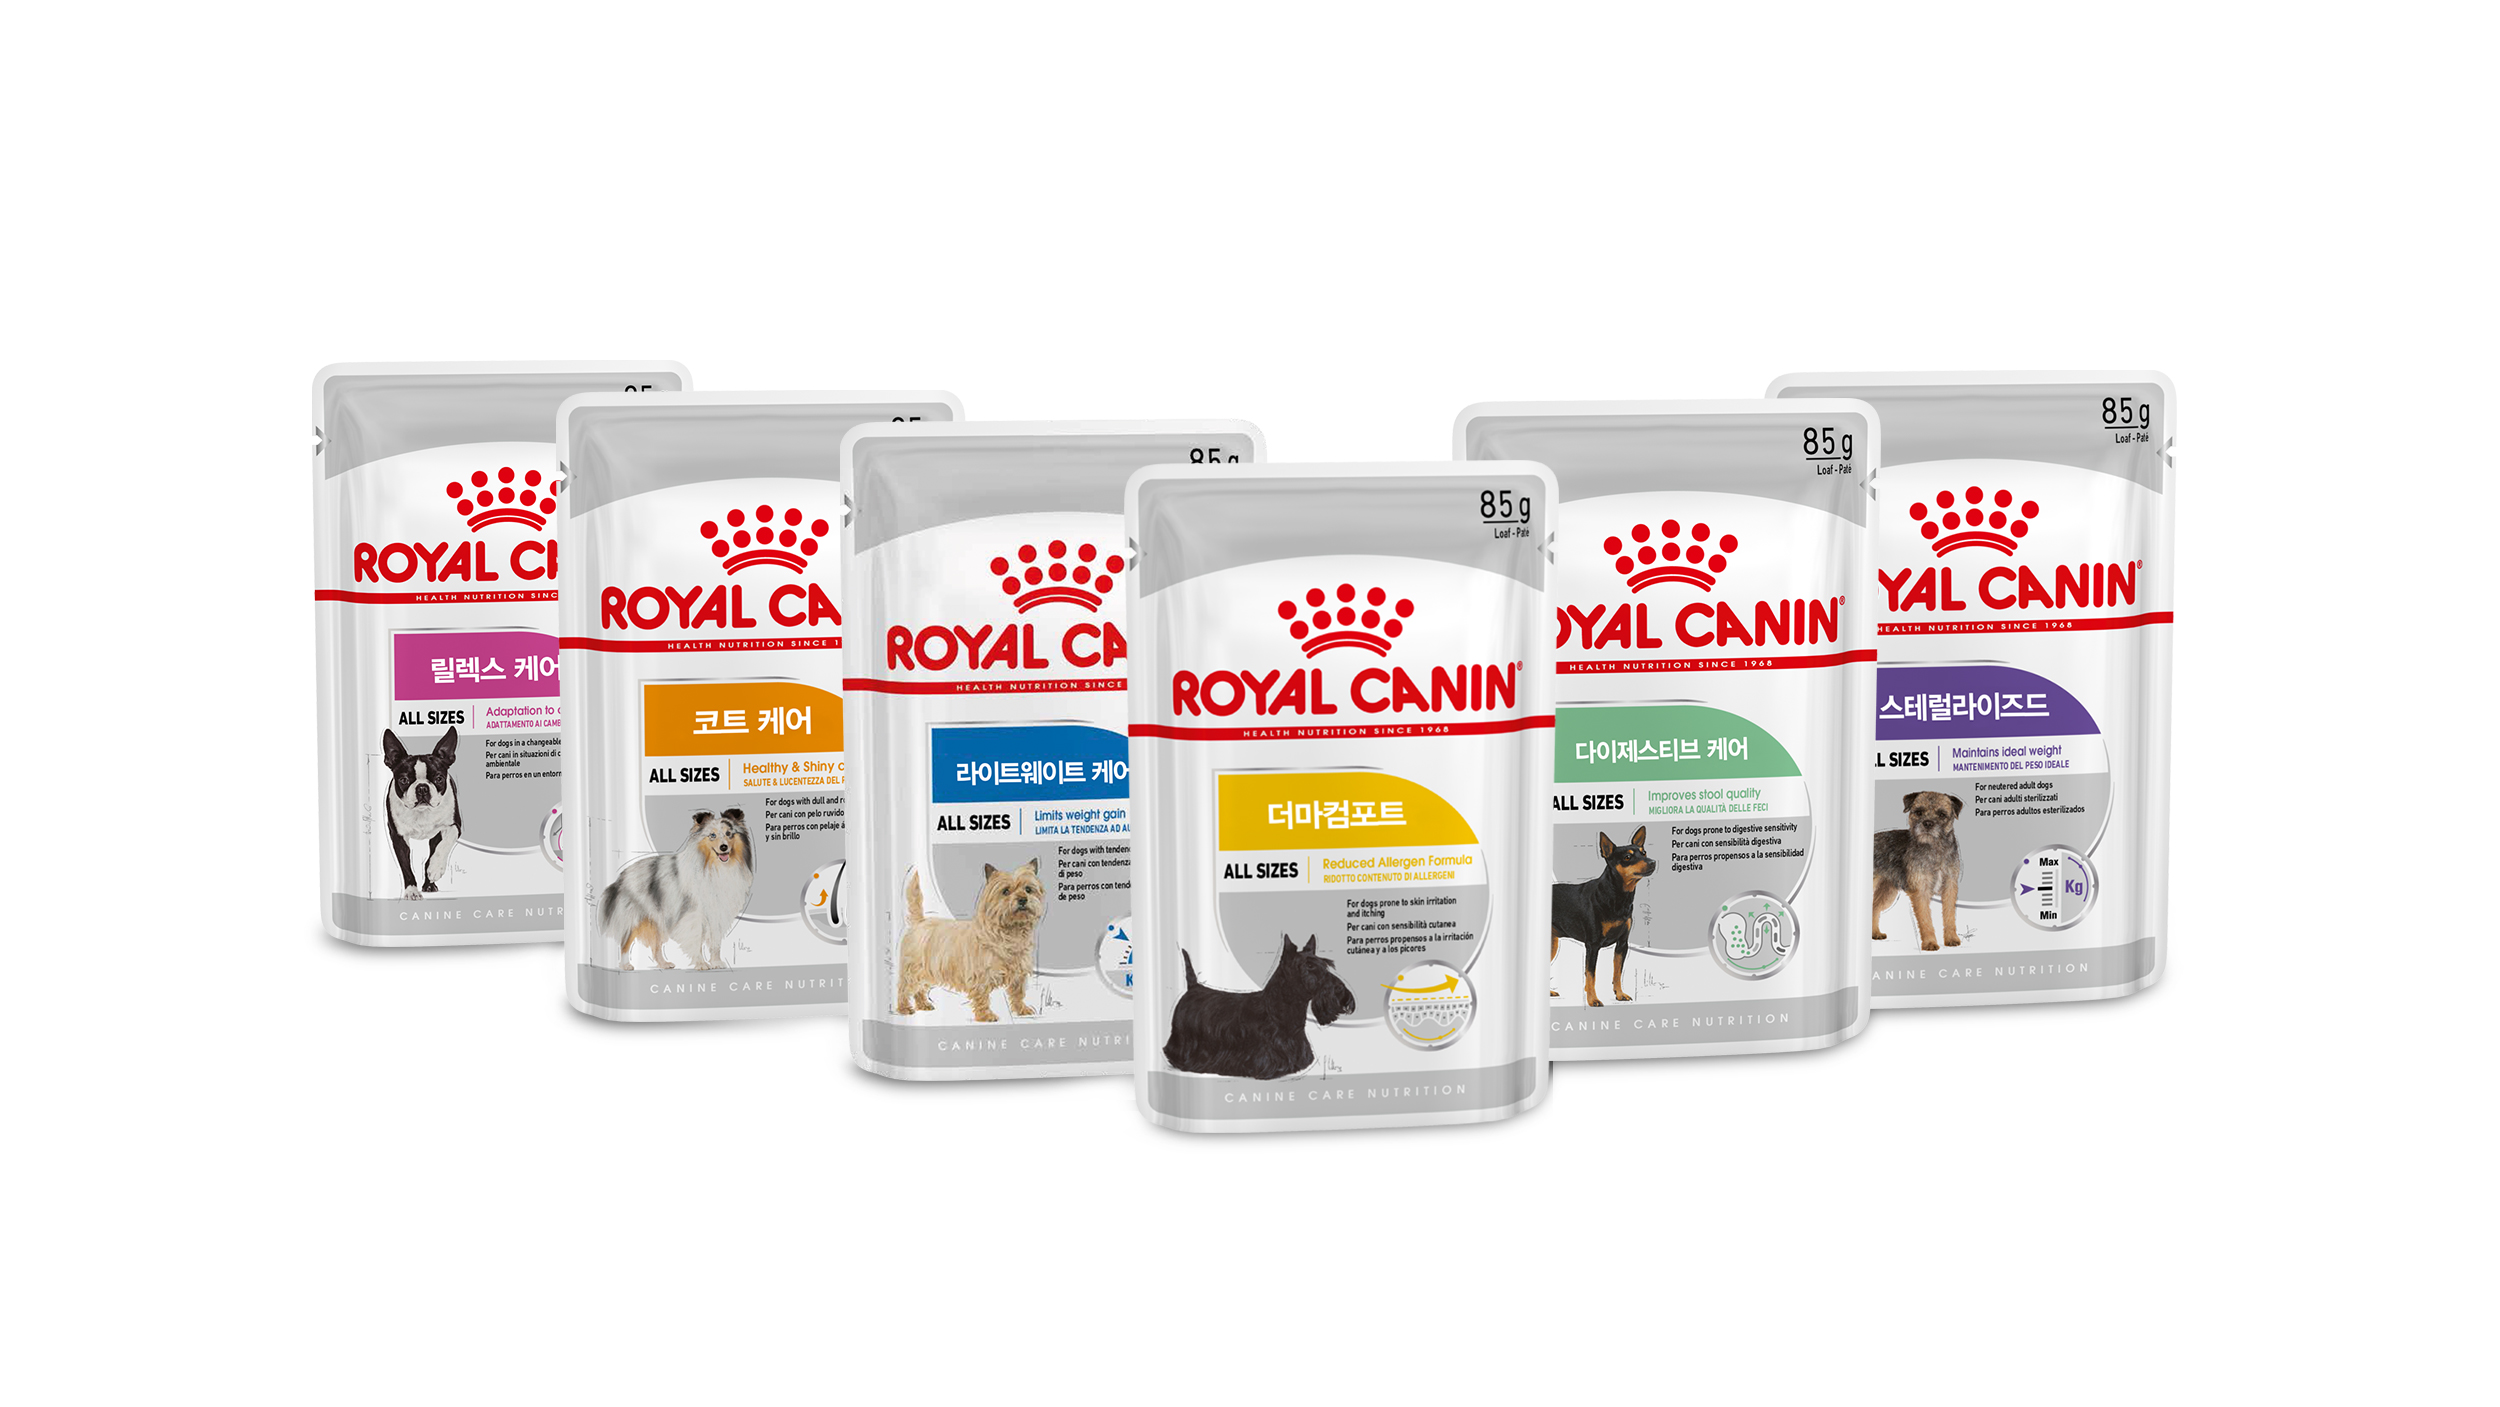 Canine care wet product range pack shot